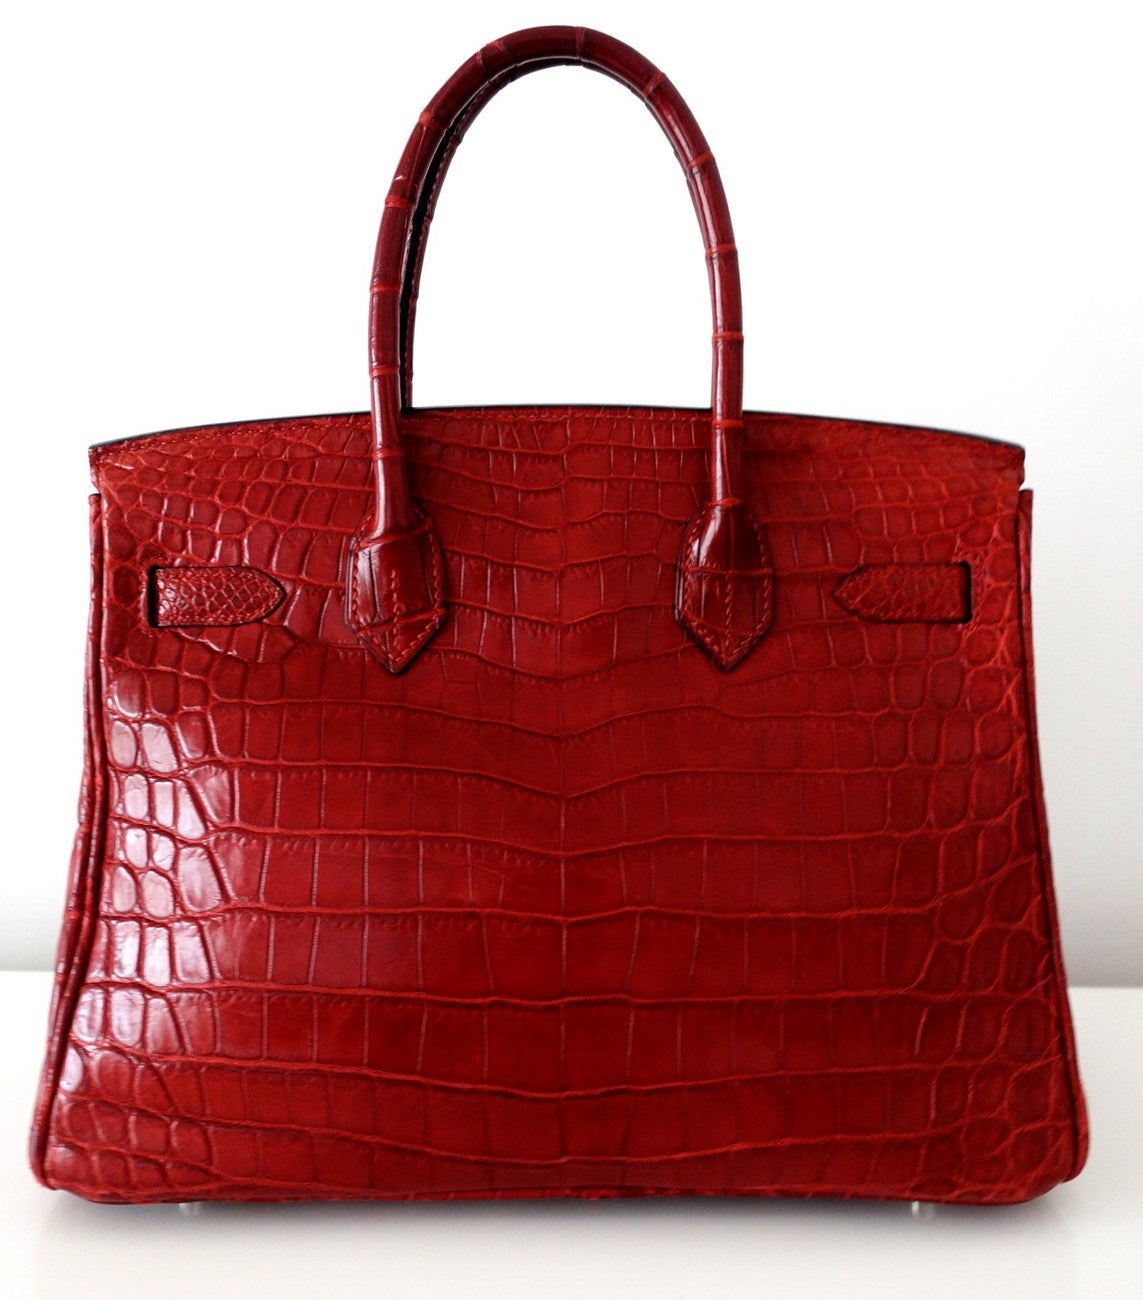 Authentic Hermes Birkin 30 Handbag Rouge H Crocodile Niloticus RARE For Sale at 1stdibs